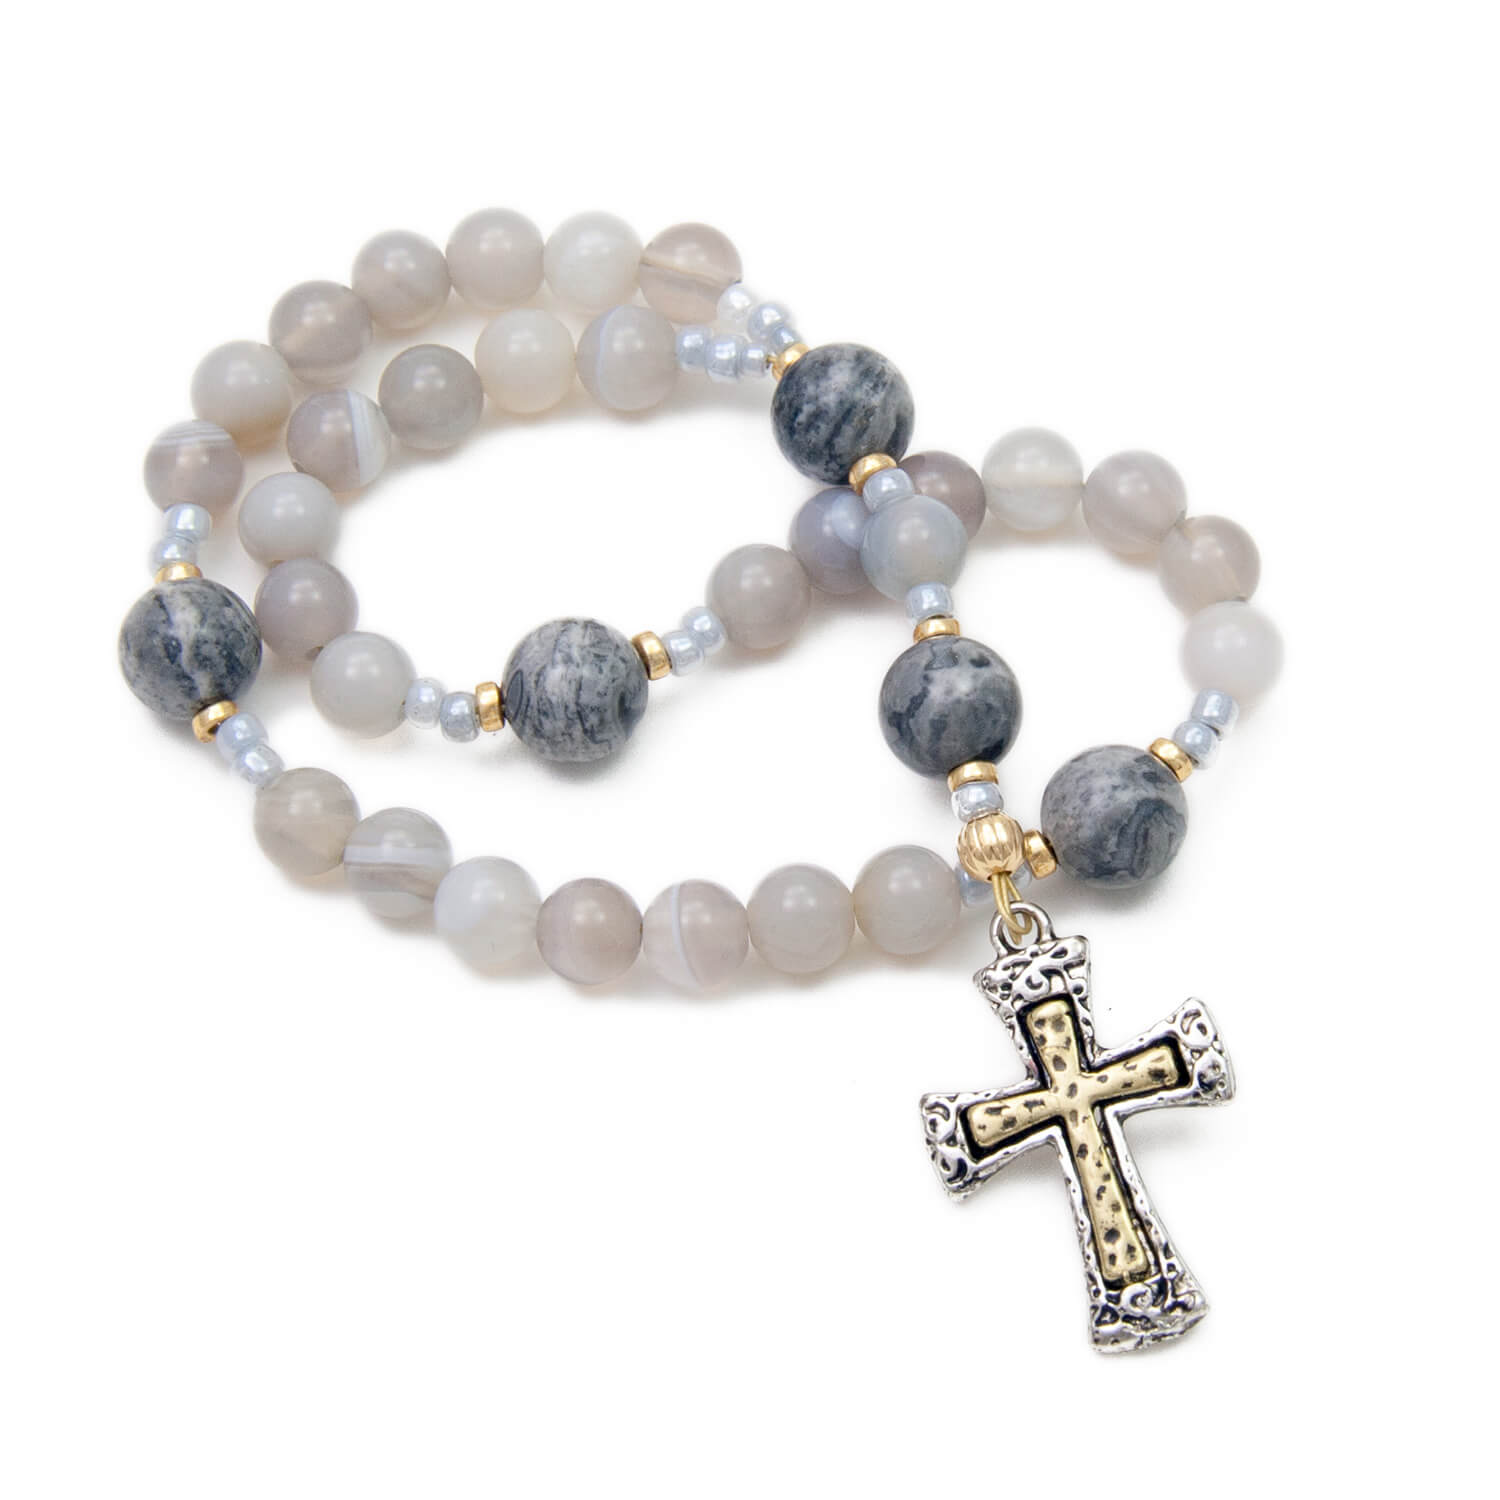 Blue Anglican Prayer Beads & Spiritual Jewelry Gifts - Unspoken Elements